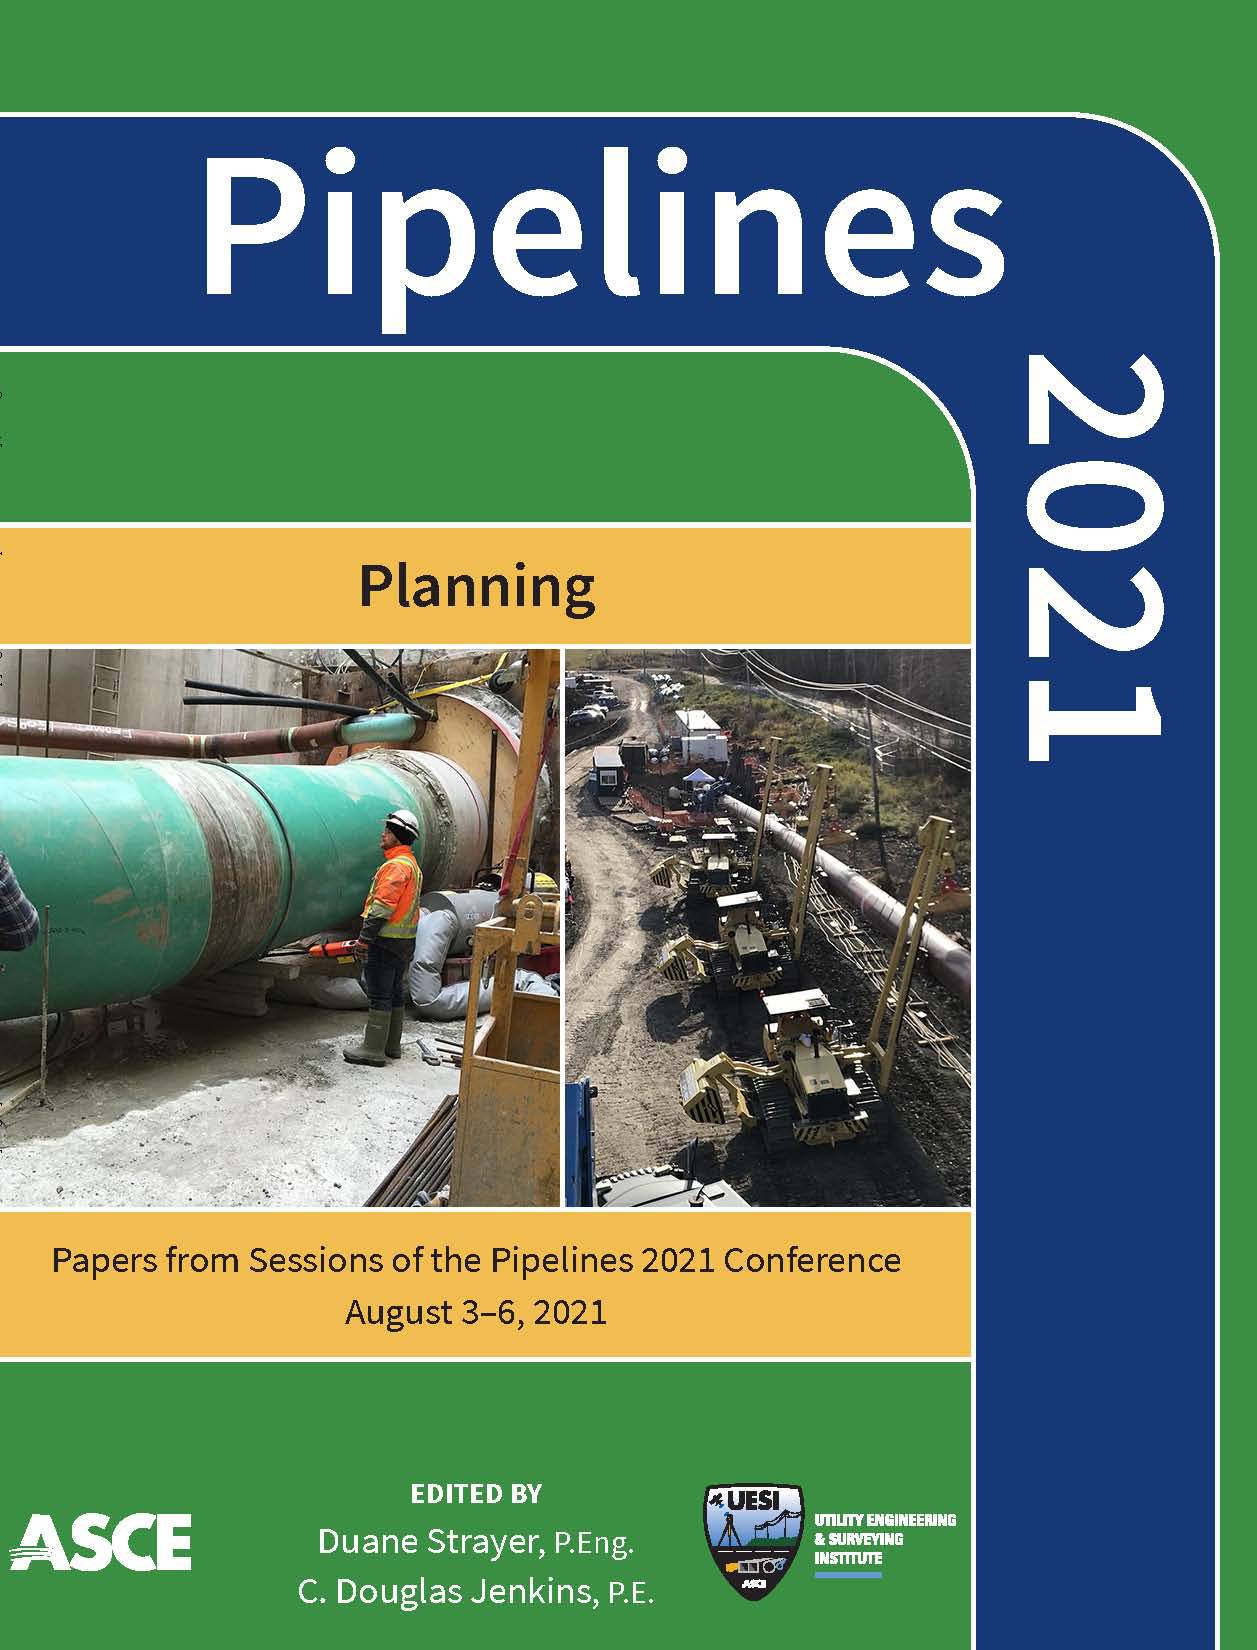 Pipelines 2021: Planning